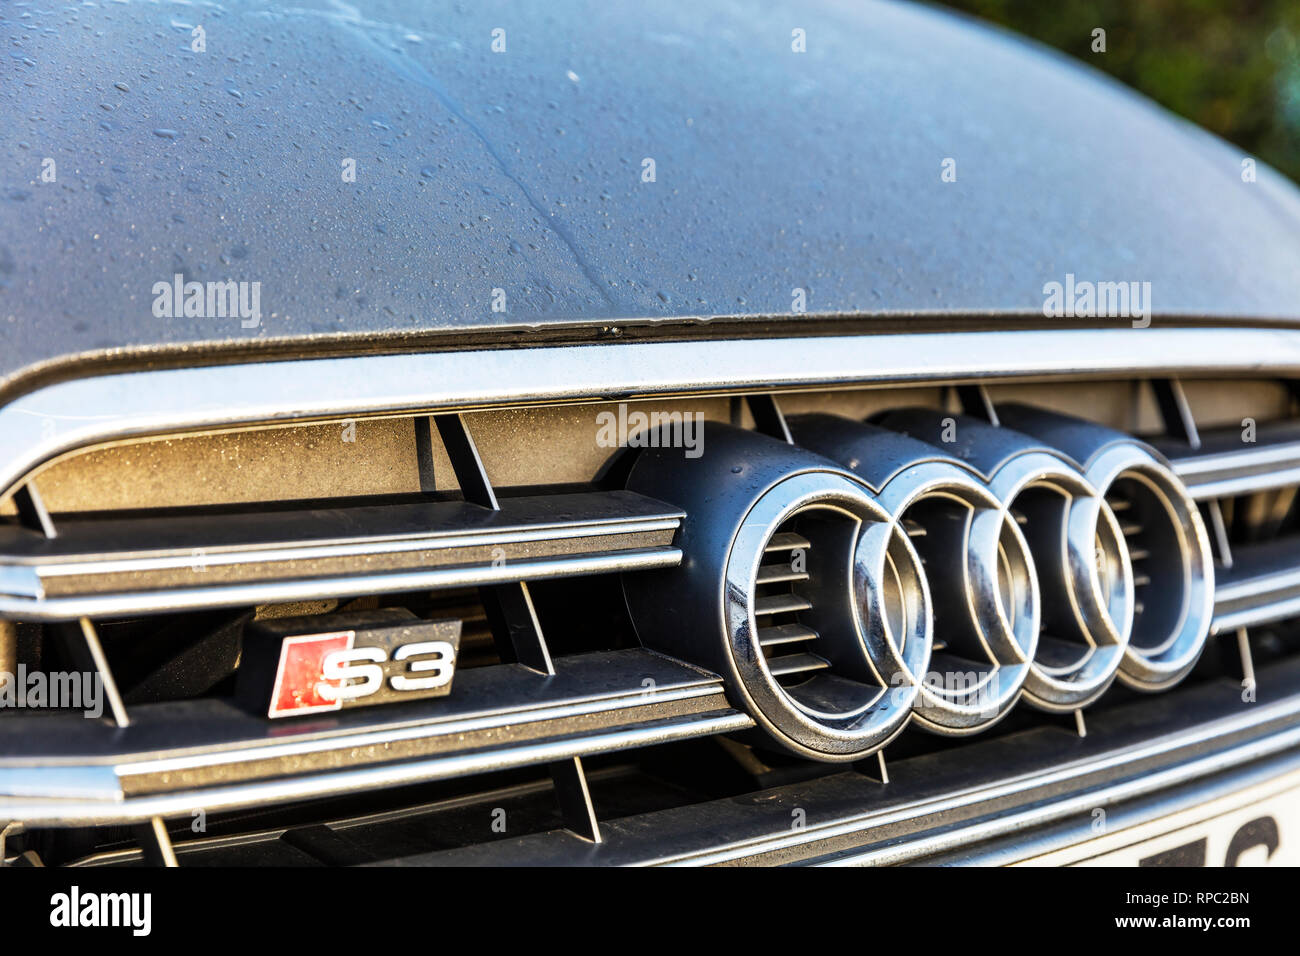 Auto S-Line emblem Audi Stockfotografie - Alamy